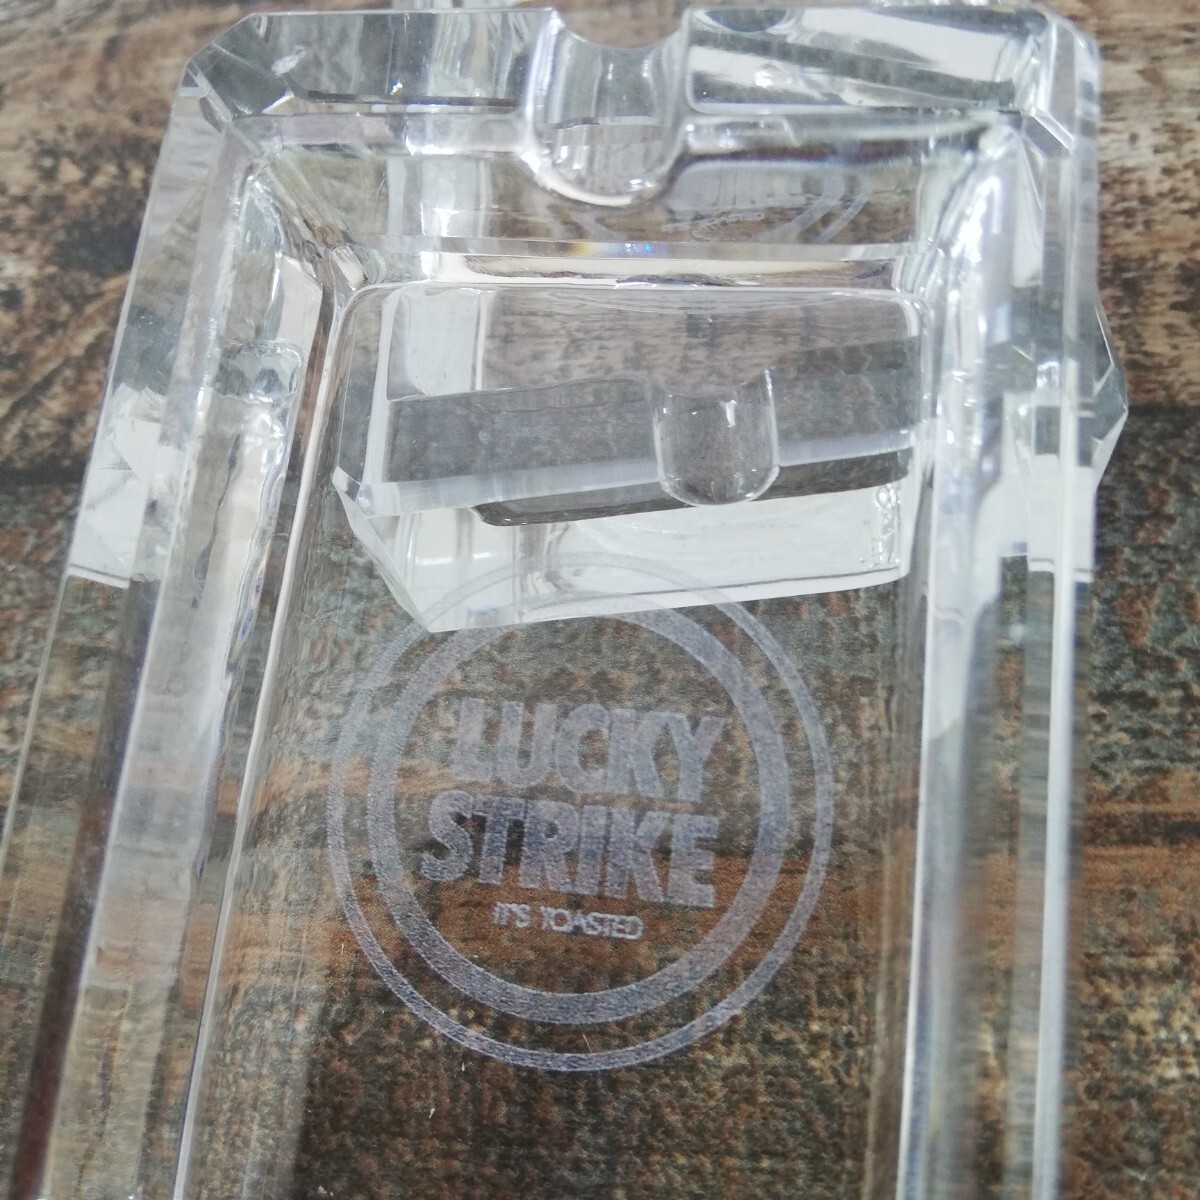 LUCKY STRIKE ラッキーストライク レーザー彫刻 ロゴ ガラス製 灰皿 ミニサイズ 9cm×5.5cm 2個セット 未使用品 [ノベルティ タバコグッズ]の画像2